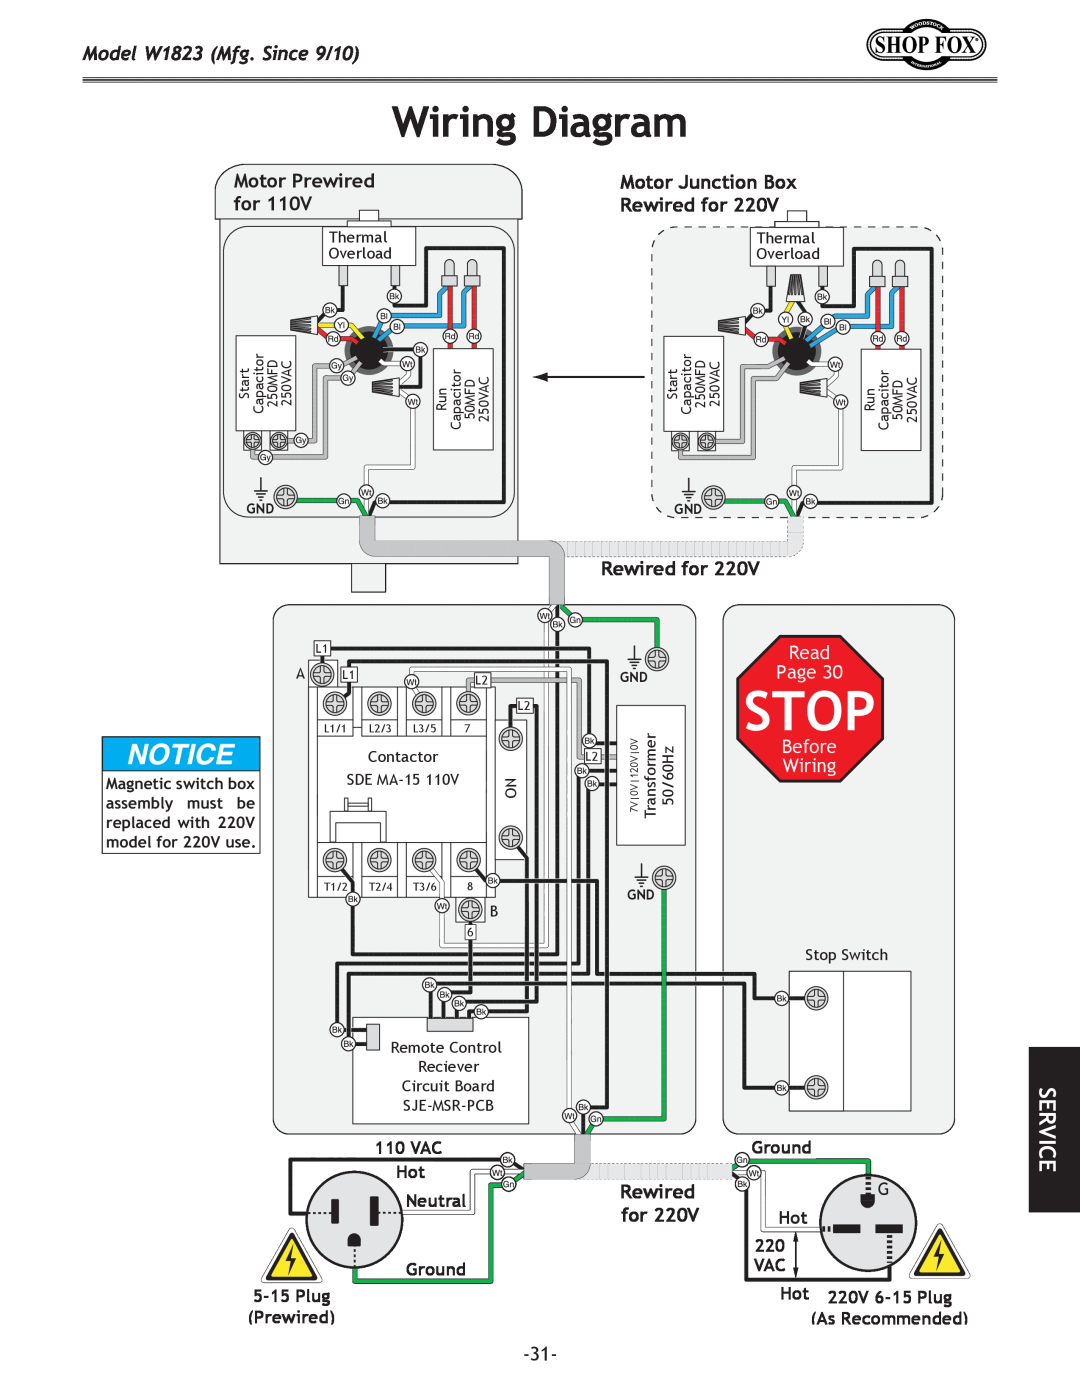 Woodstock Wiring Diagram, Stop, Model W1823 Mfg. Since 9/10, Motor Prewired, Motor Junction Box, Rewired for, Read 